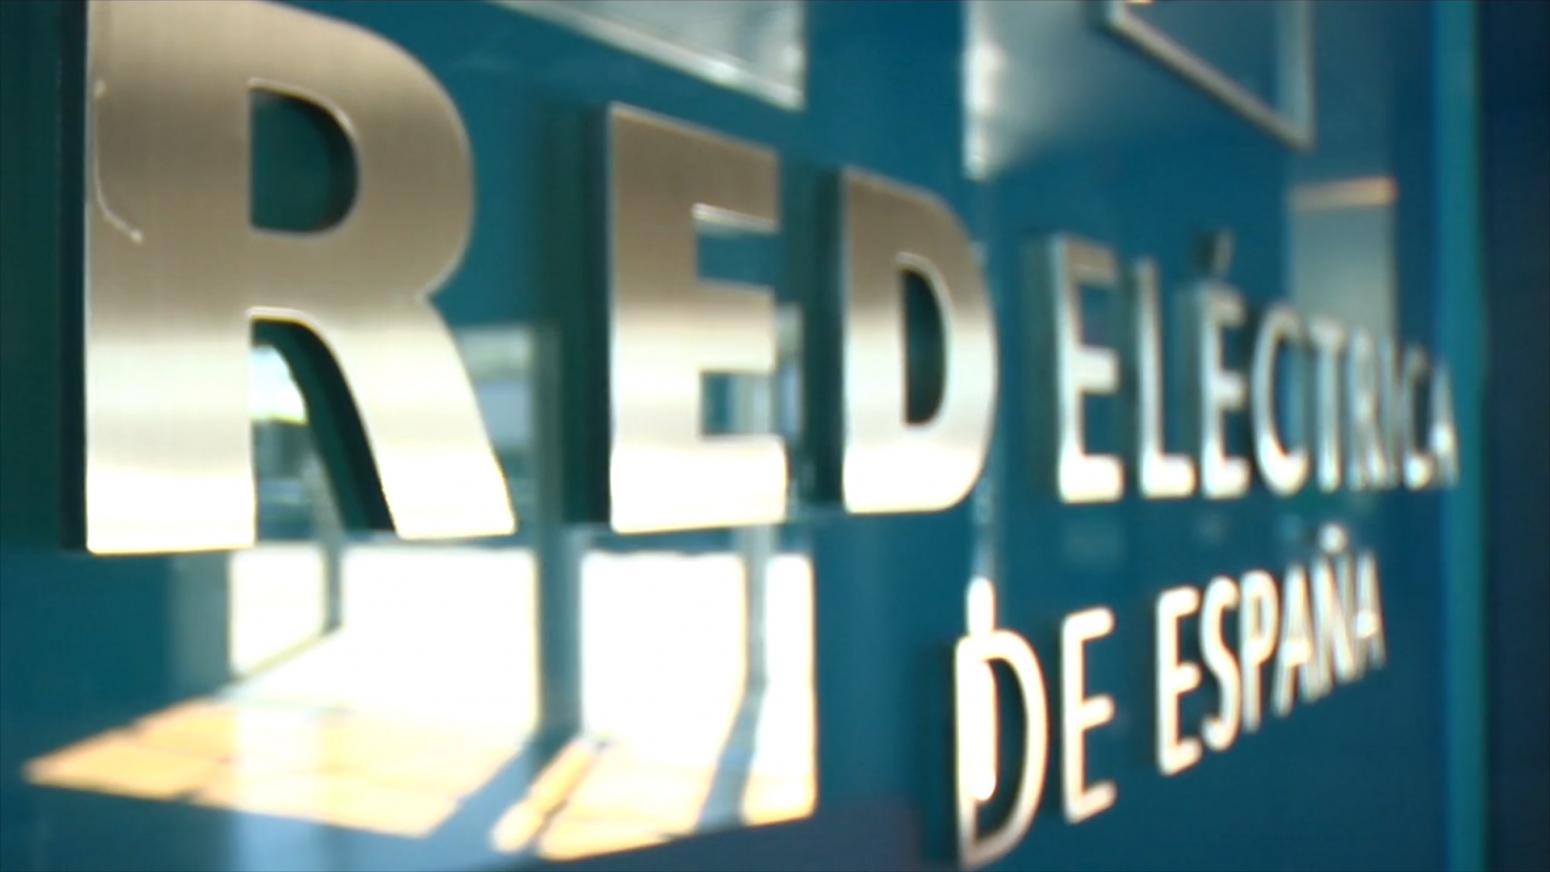 Red Eléctrica España REE 